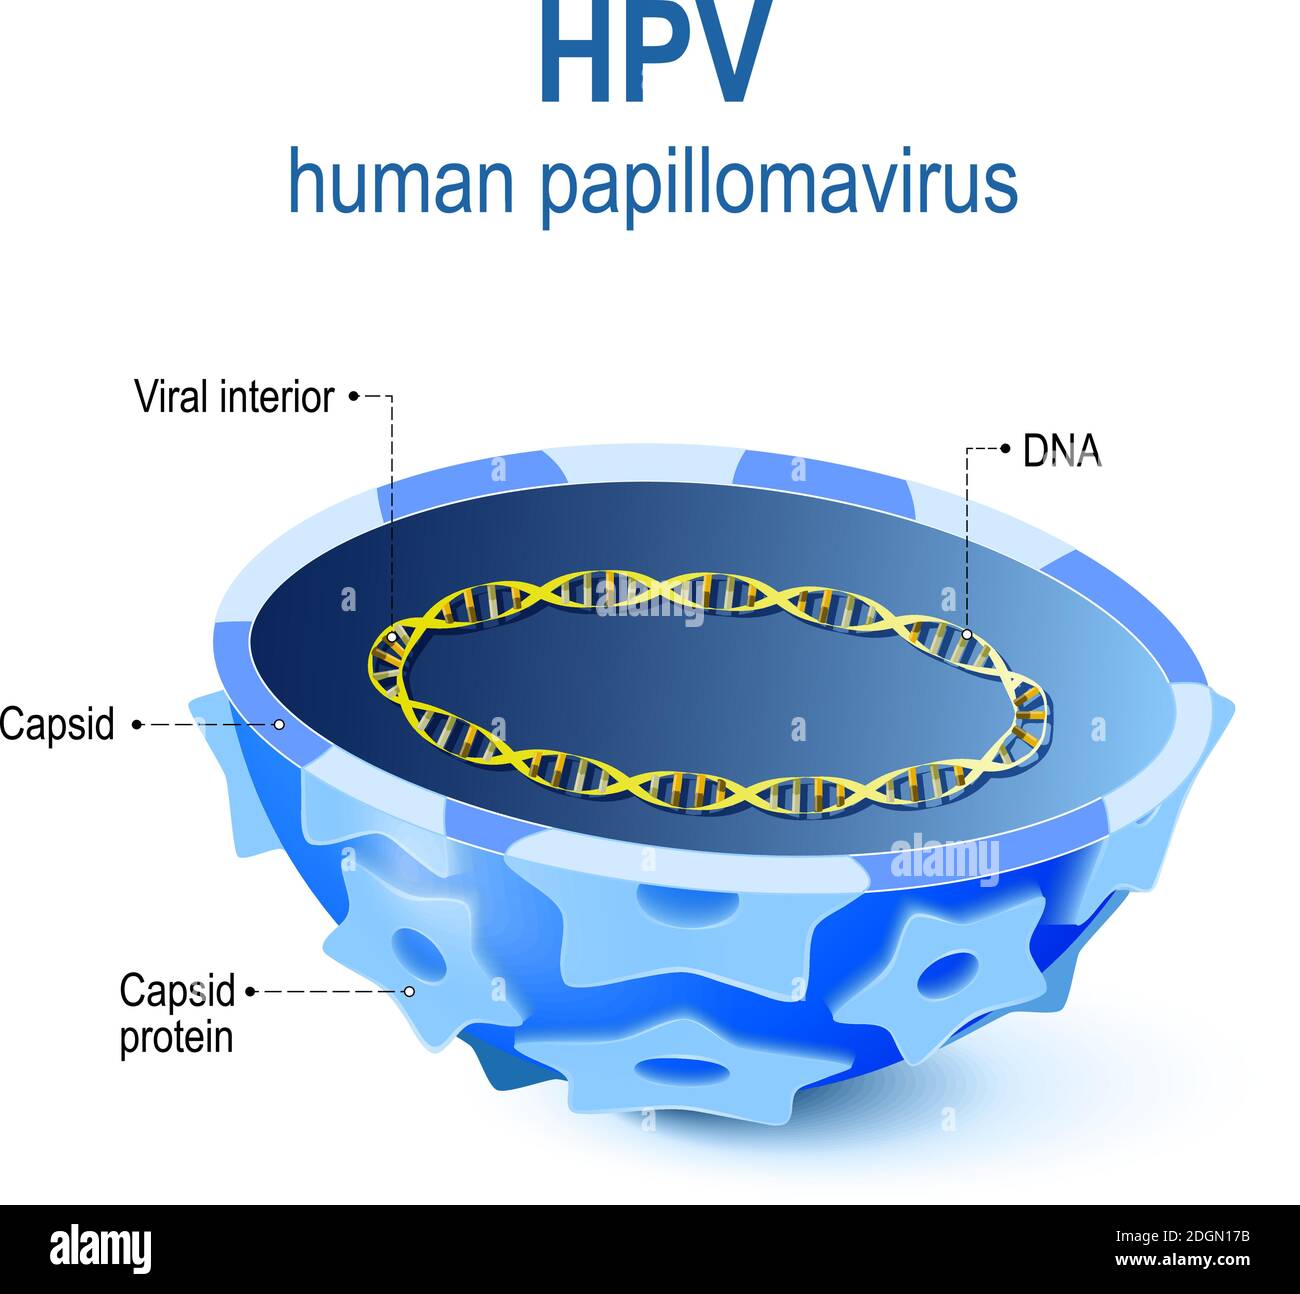 hpv - Humane Papillomavirus. Vektor-Illustration des viralen Inneren. Querschnitt des Papillomavirus Capsid mit viraler DNA. HPV ist eine Infektion Stock Vektor